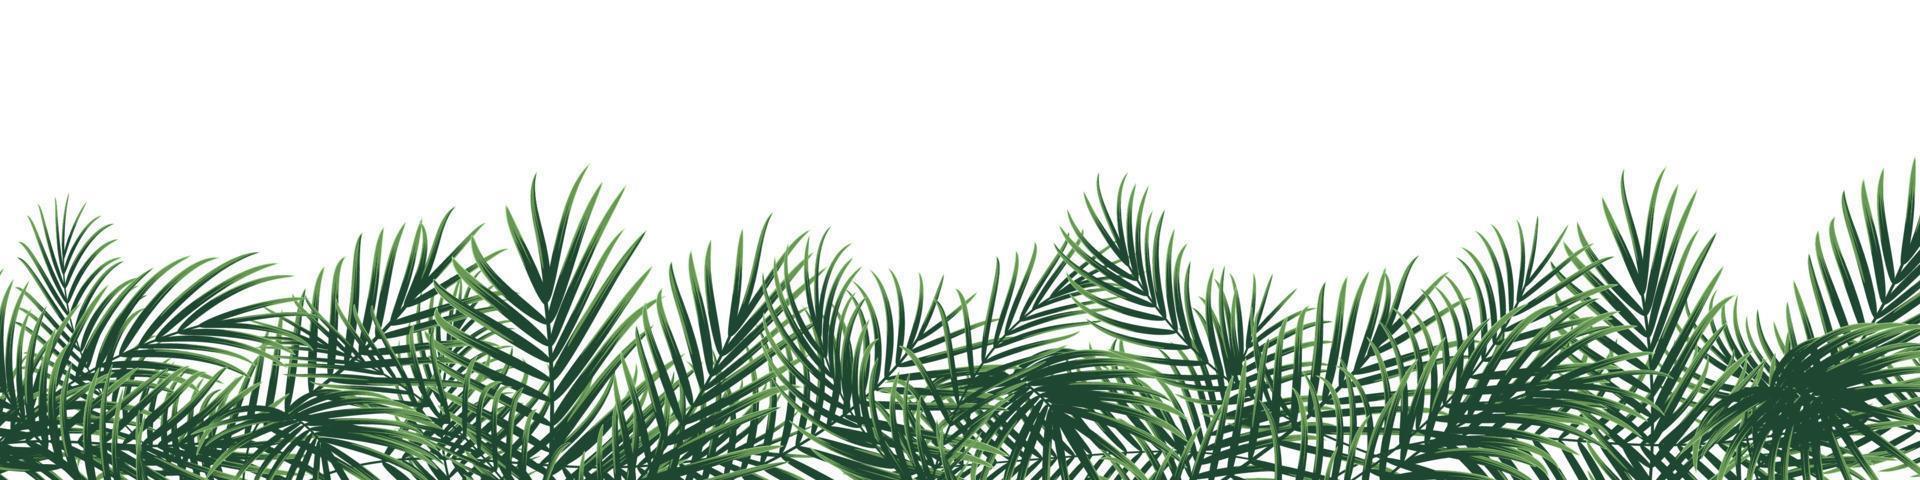 fondo tropical brillante con hoja de palma vector